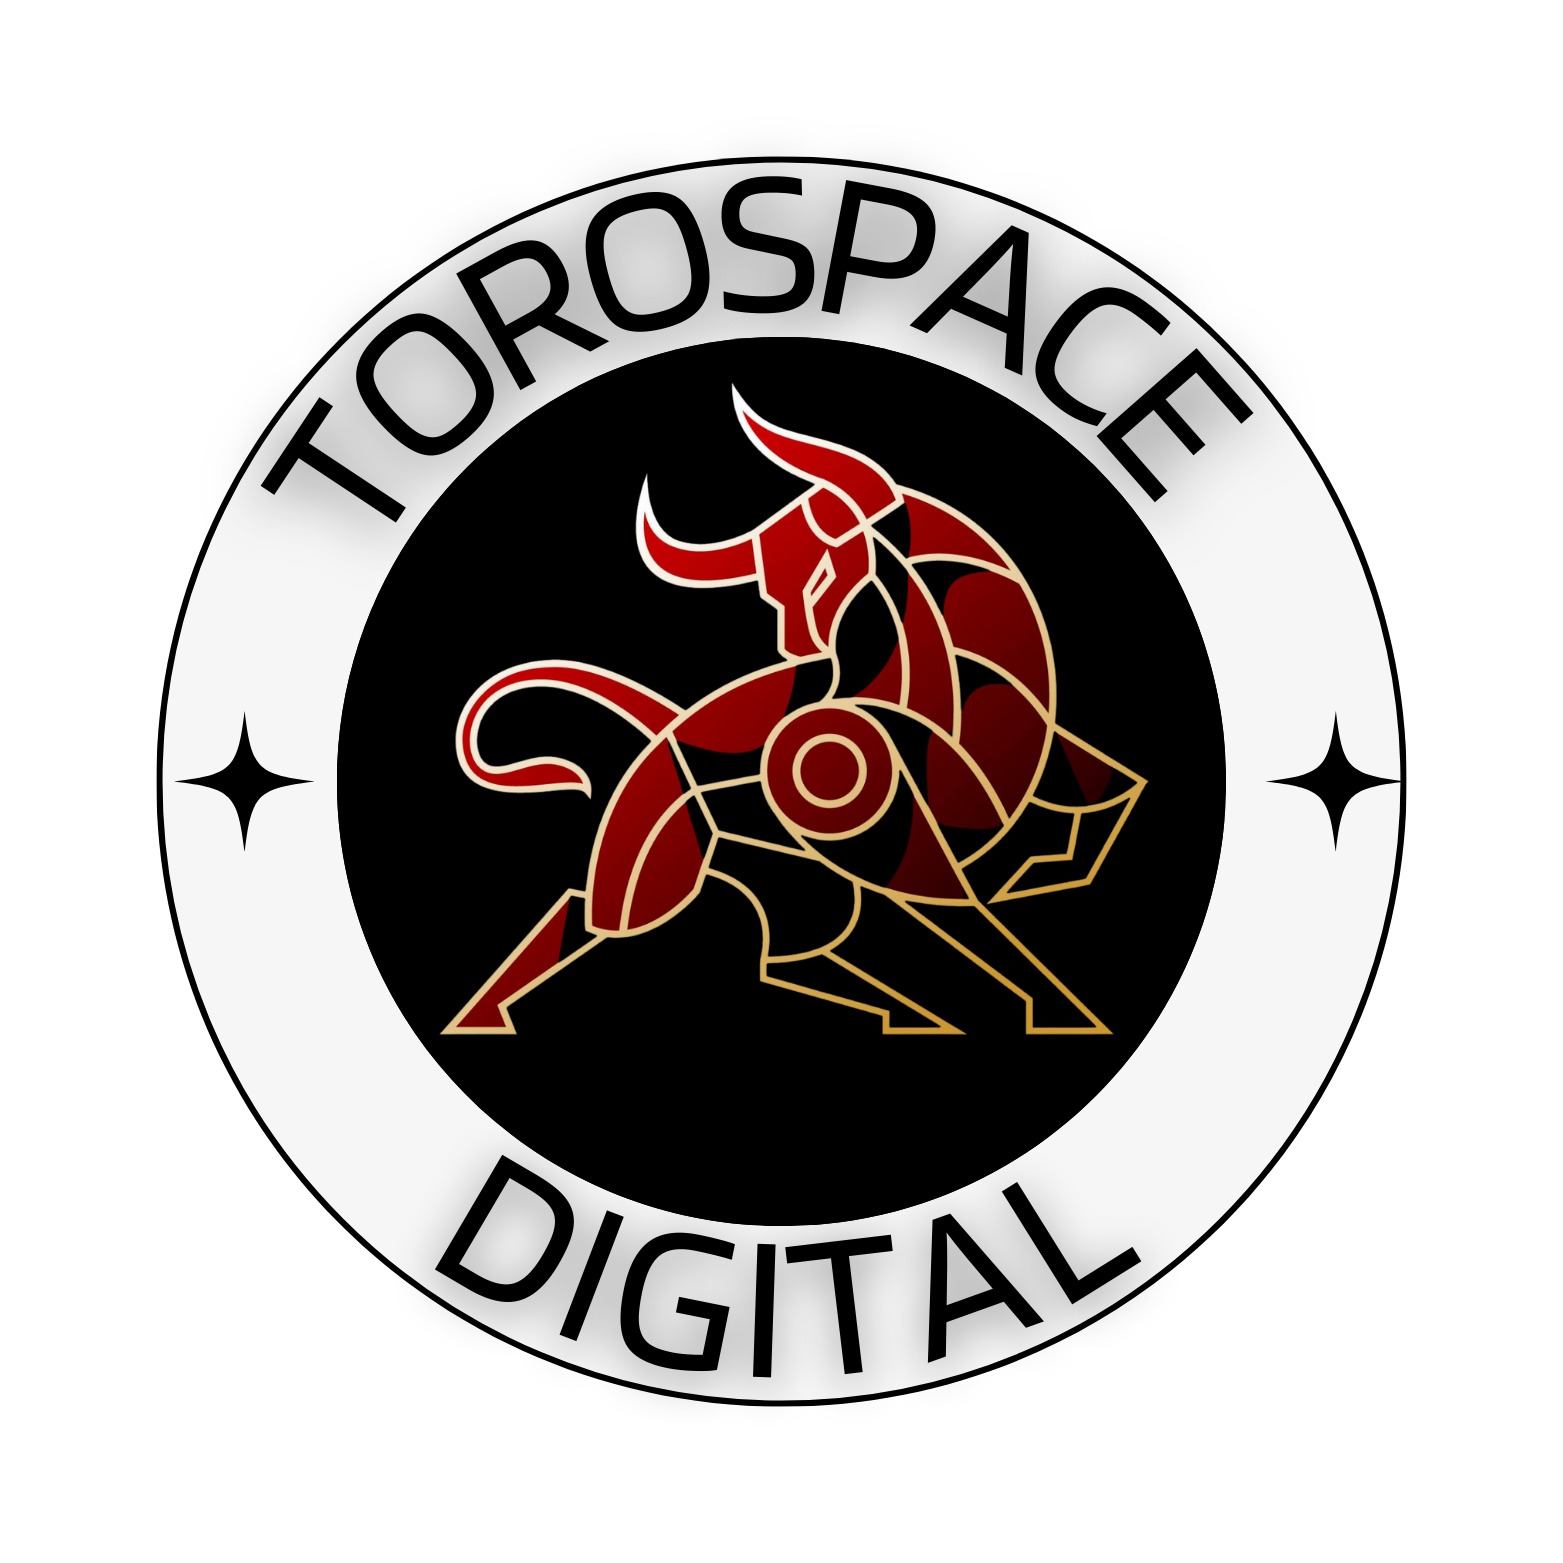 Torospace Digital